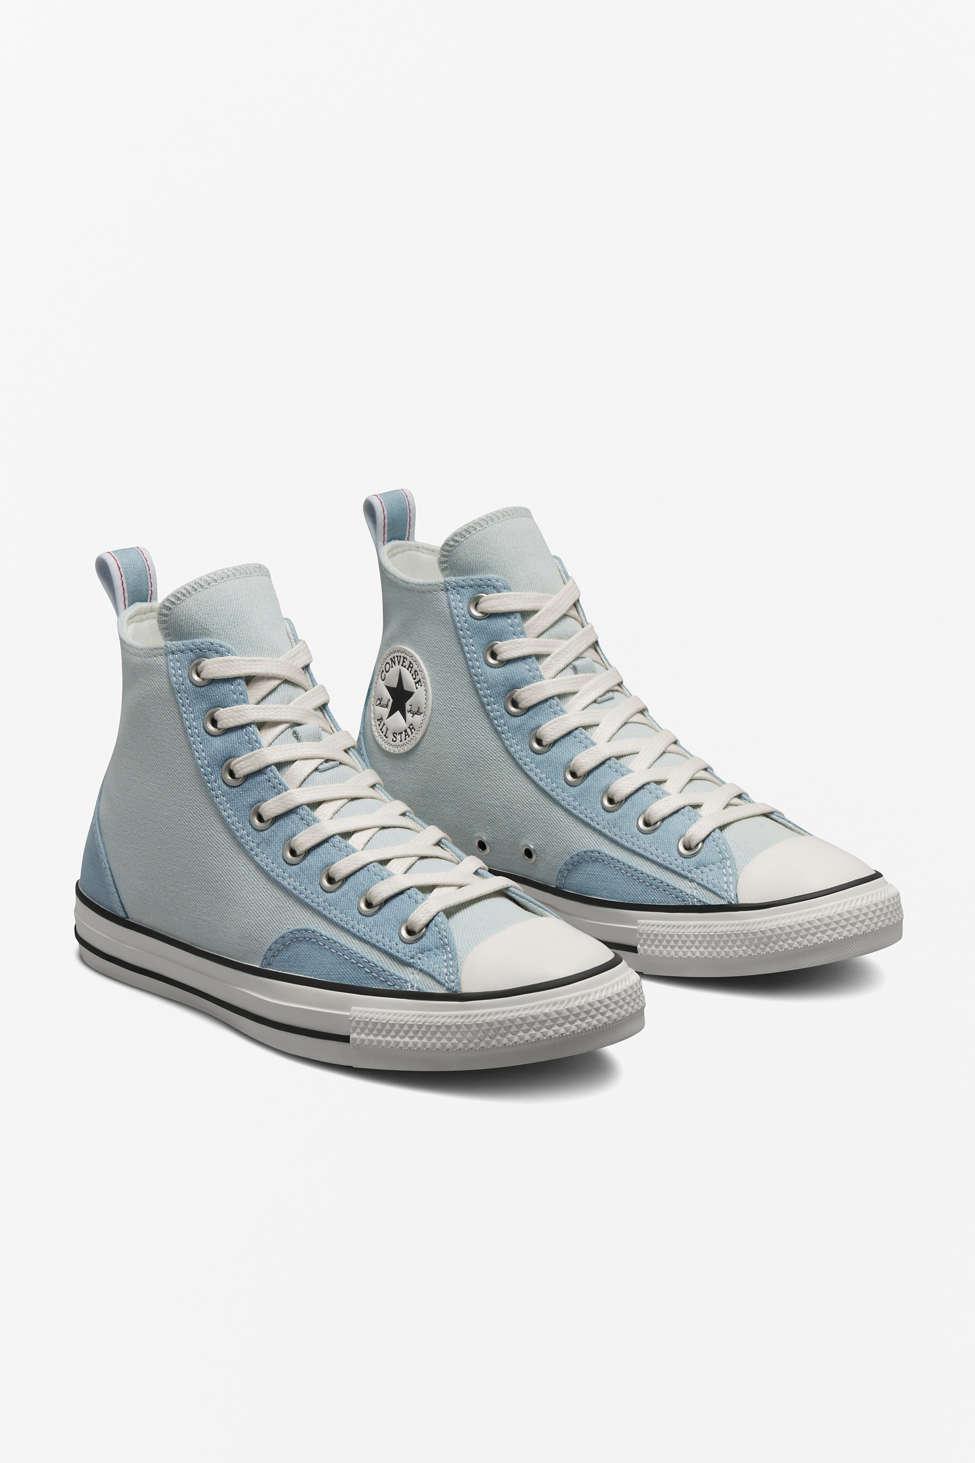 Converse Chuck Taylor All Star Denim High Top Sneaker in Blue | Lyst